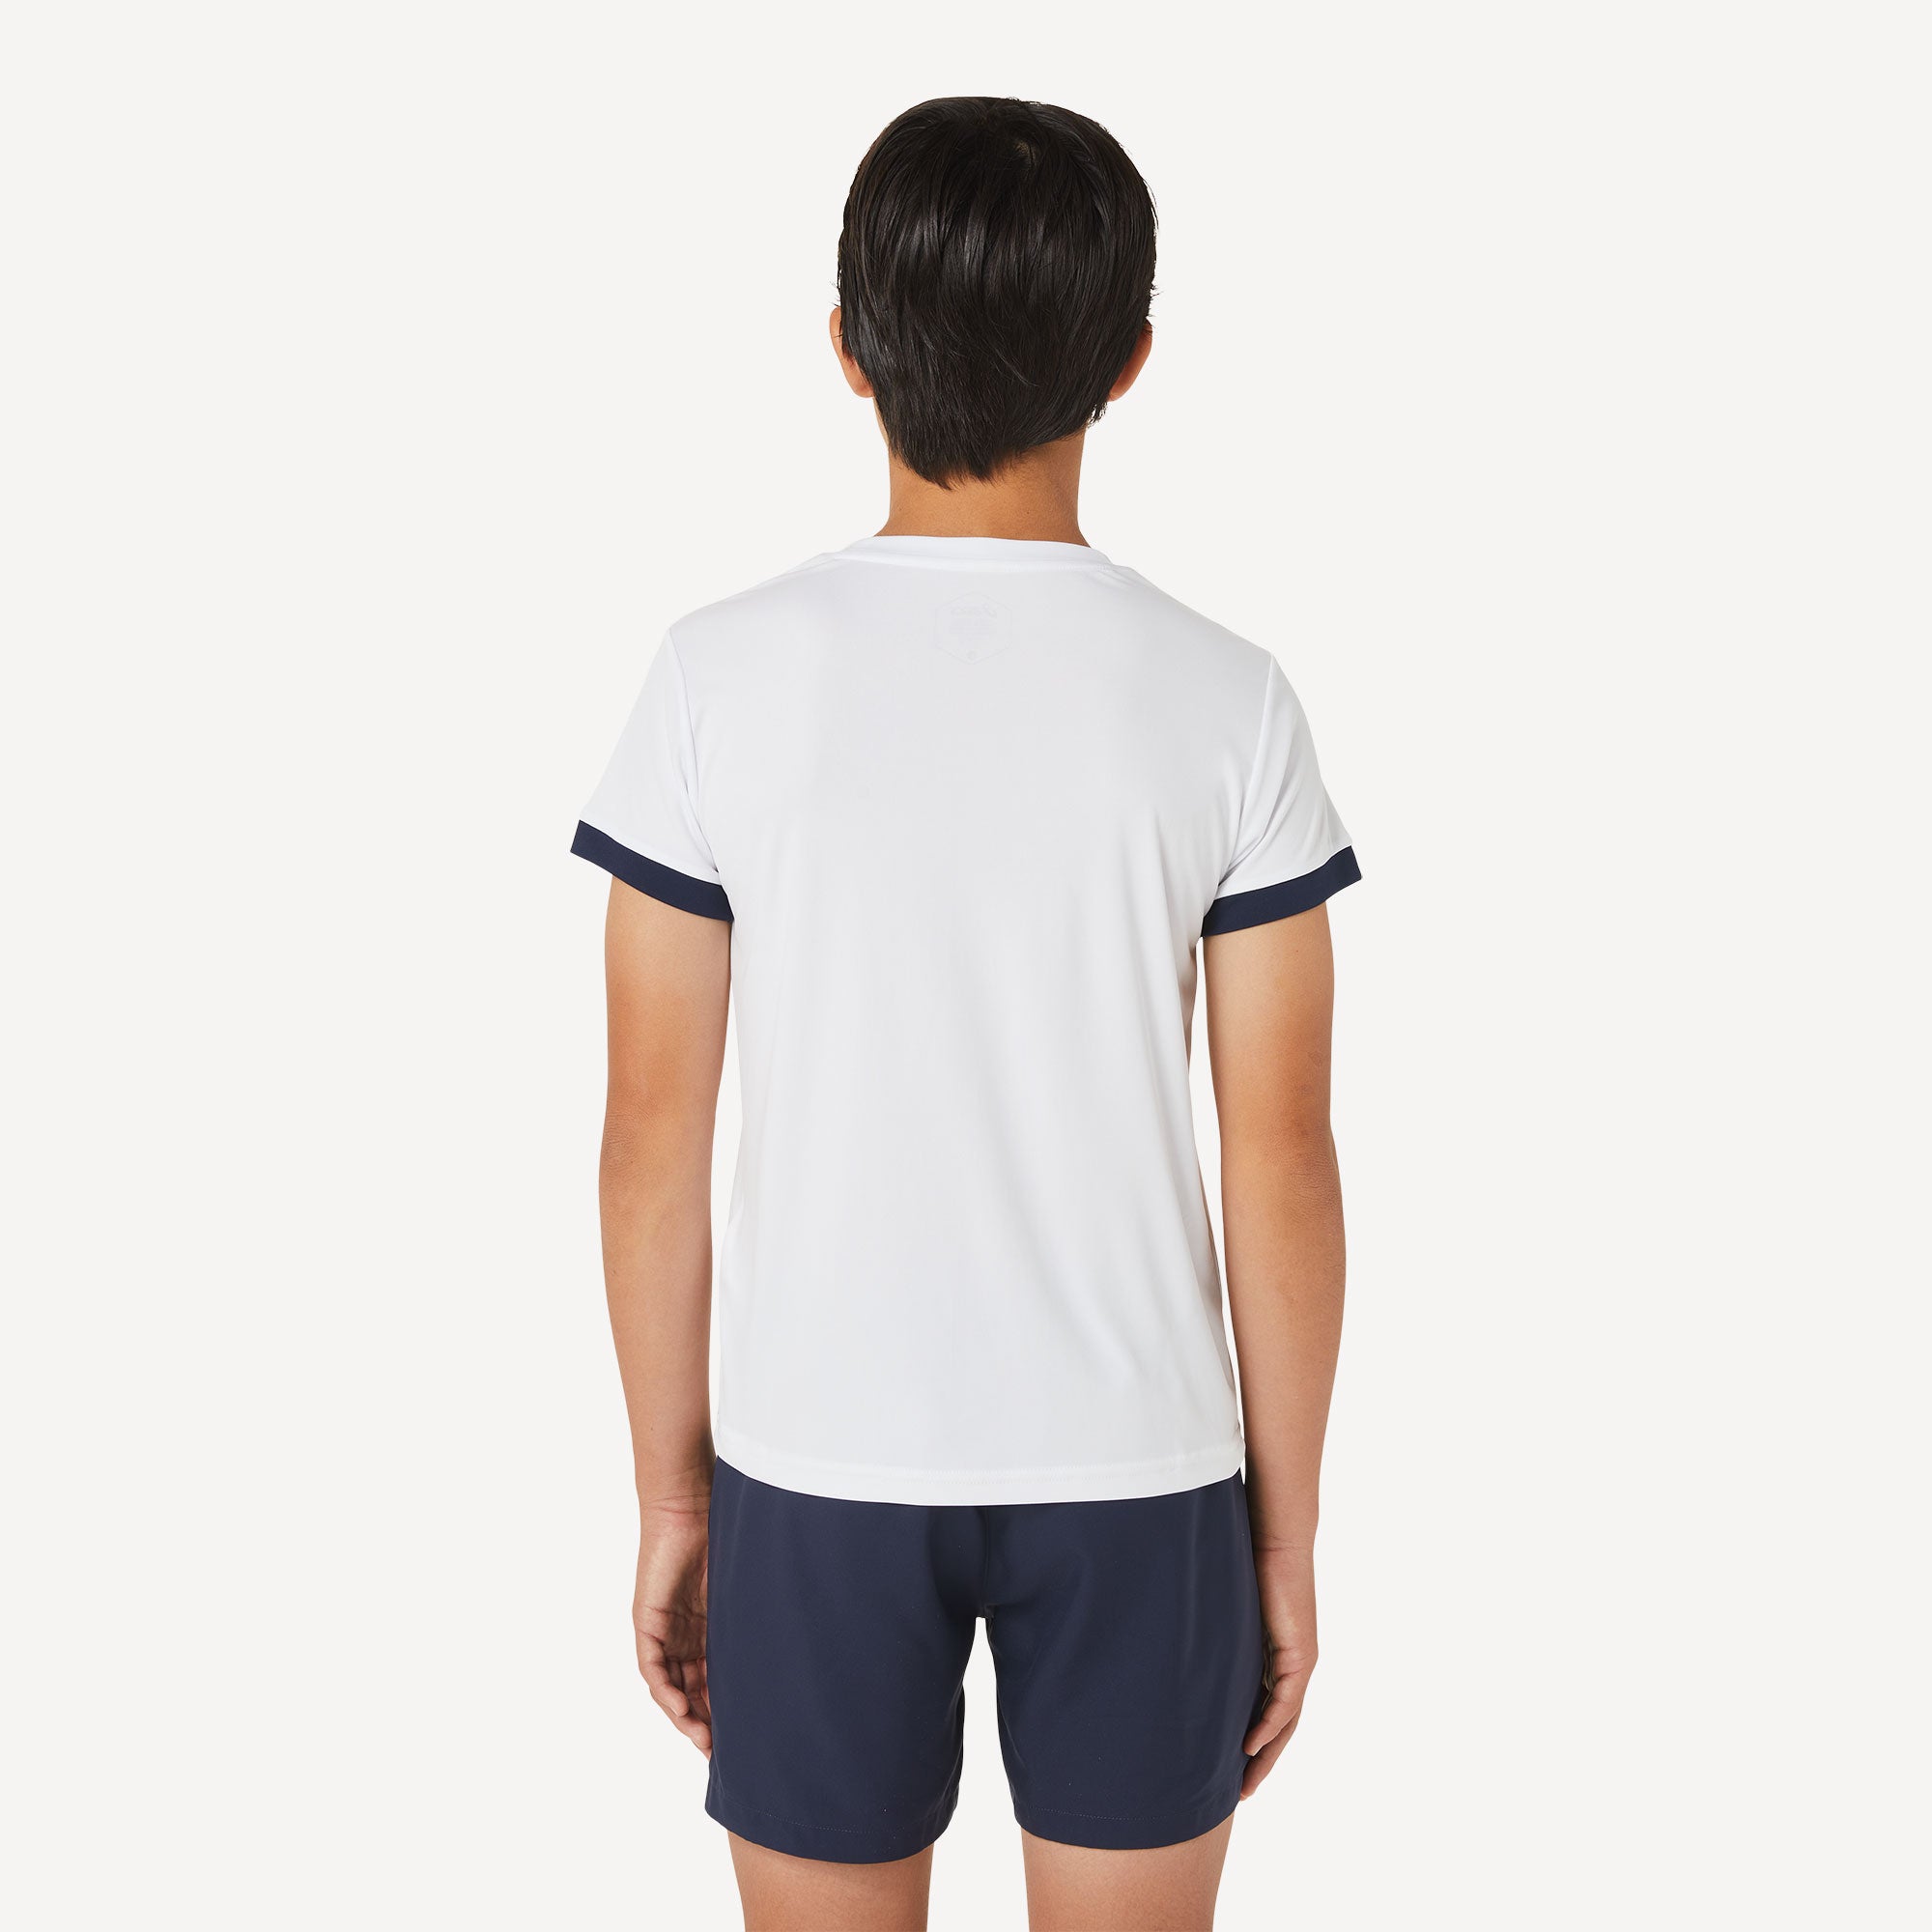 ASICS Boys' Tennis Shirt White (2)